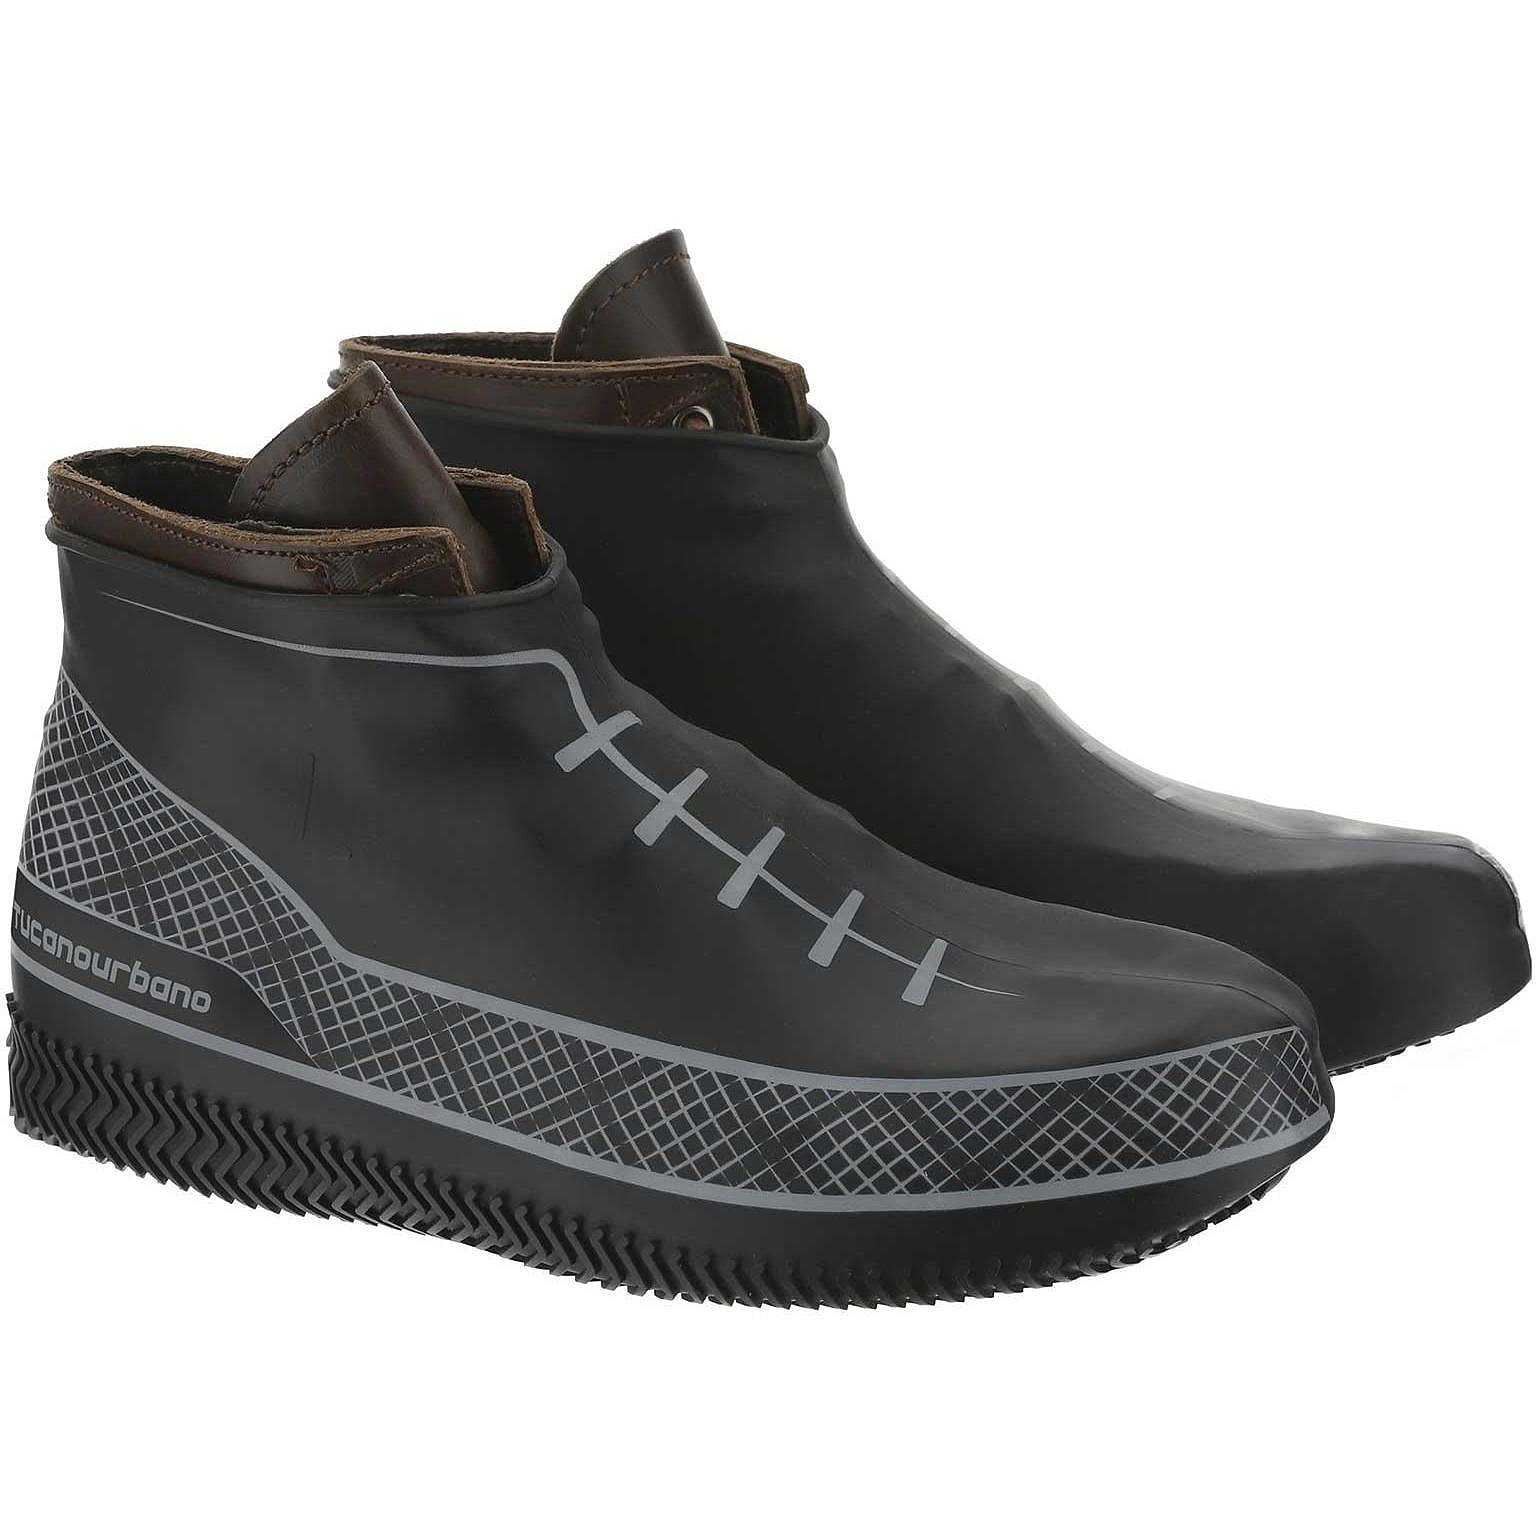 Couvre-chaussures imperméable Tucano Urbano 519 FOOTERINE Sneaker Vente en  Ligne 